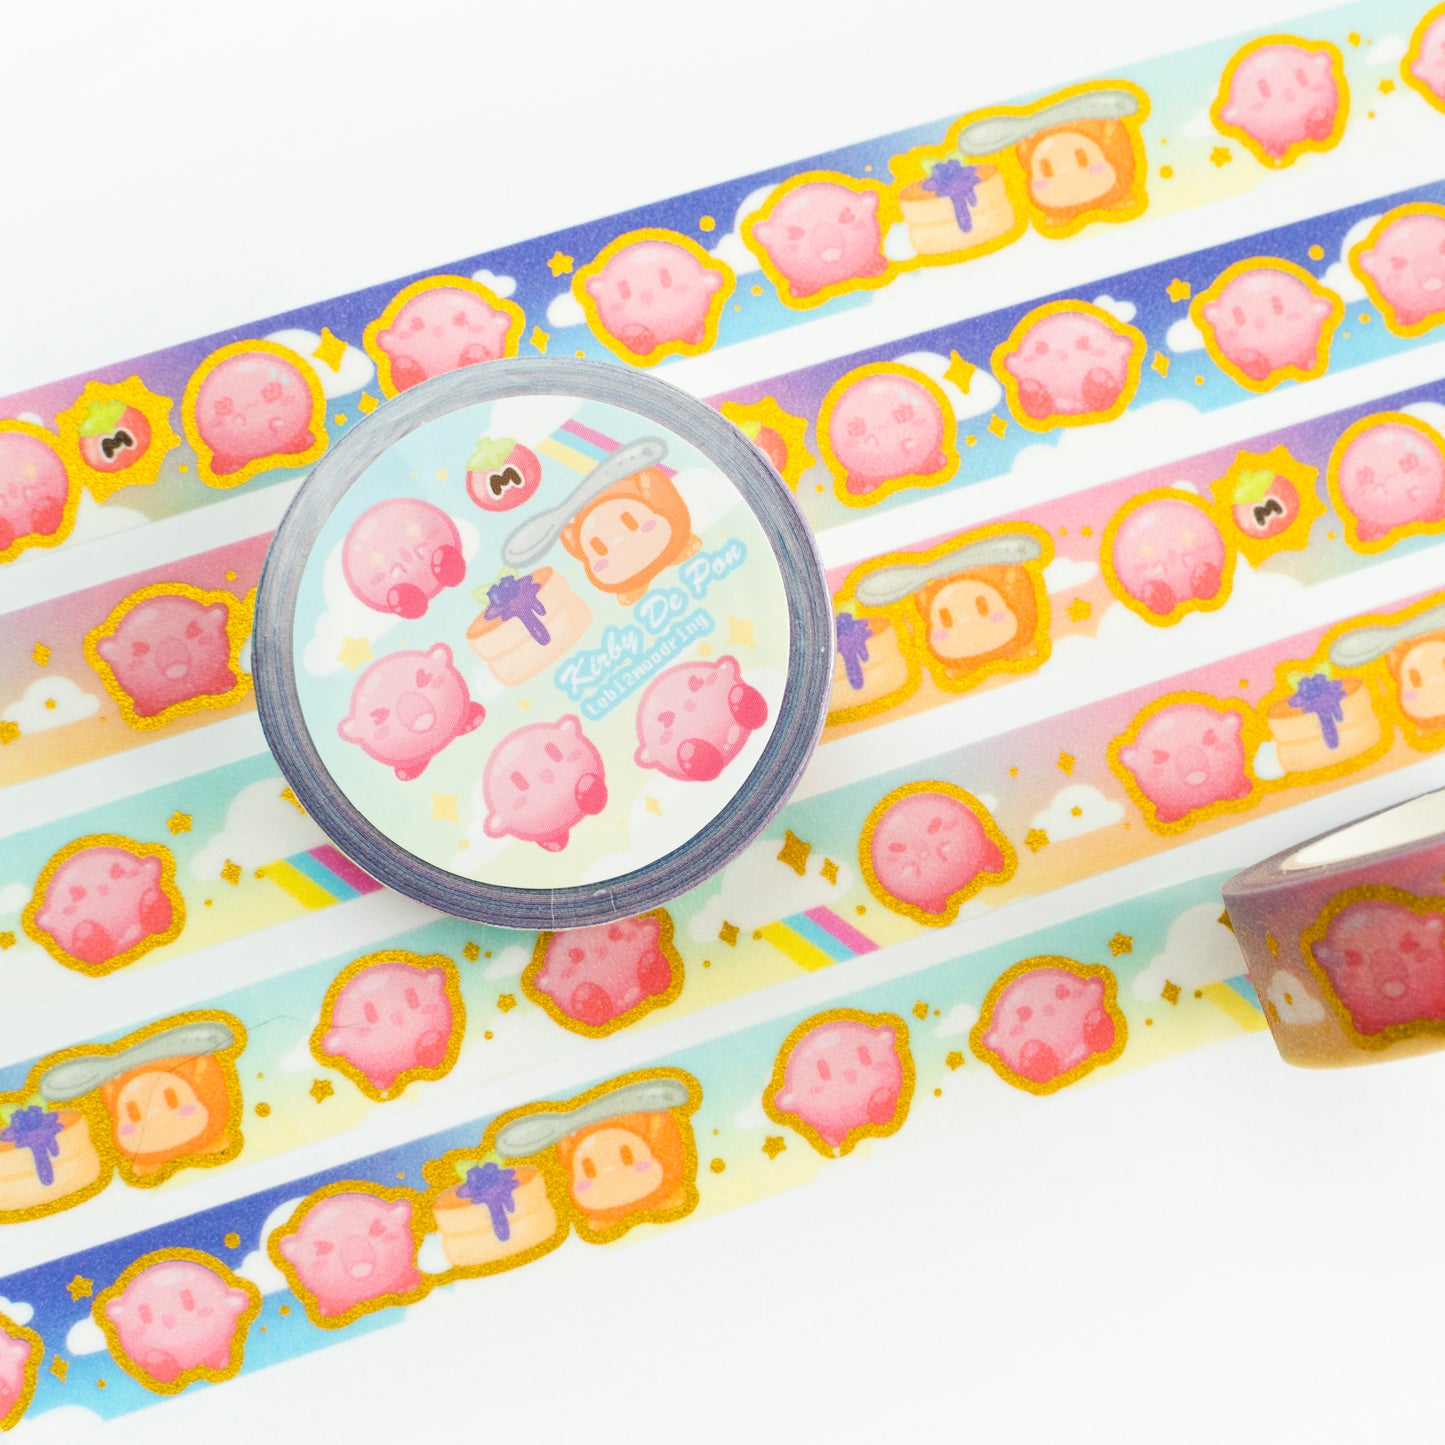 Kirby De Pon - Gold Foil + Glitter Washi Tape